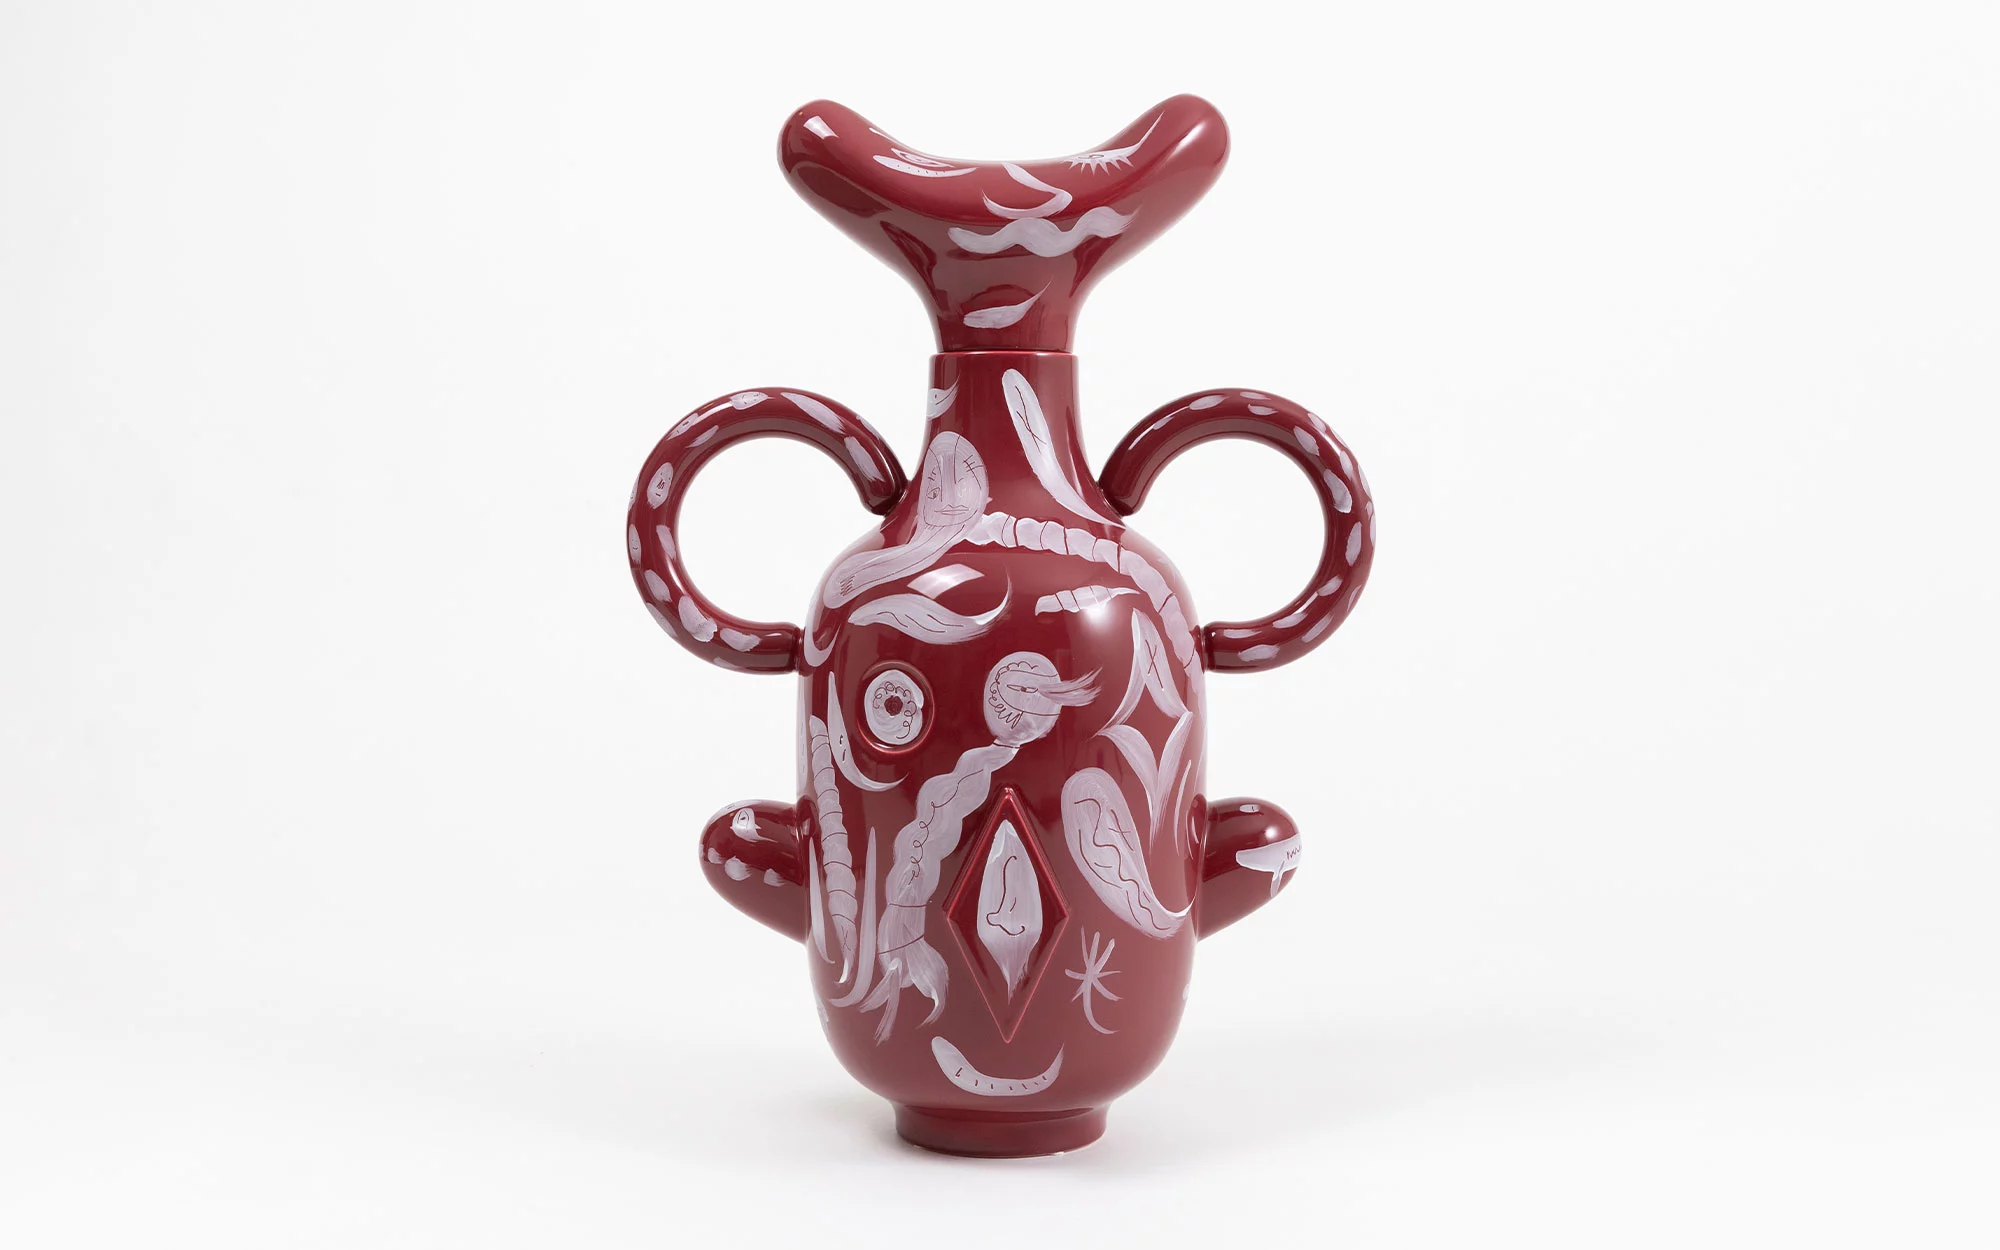 Botijo - Jaime Hayon - Vase - Galerie kreo